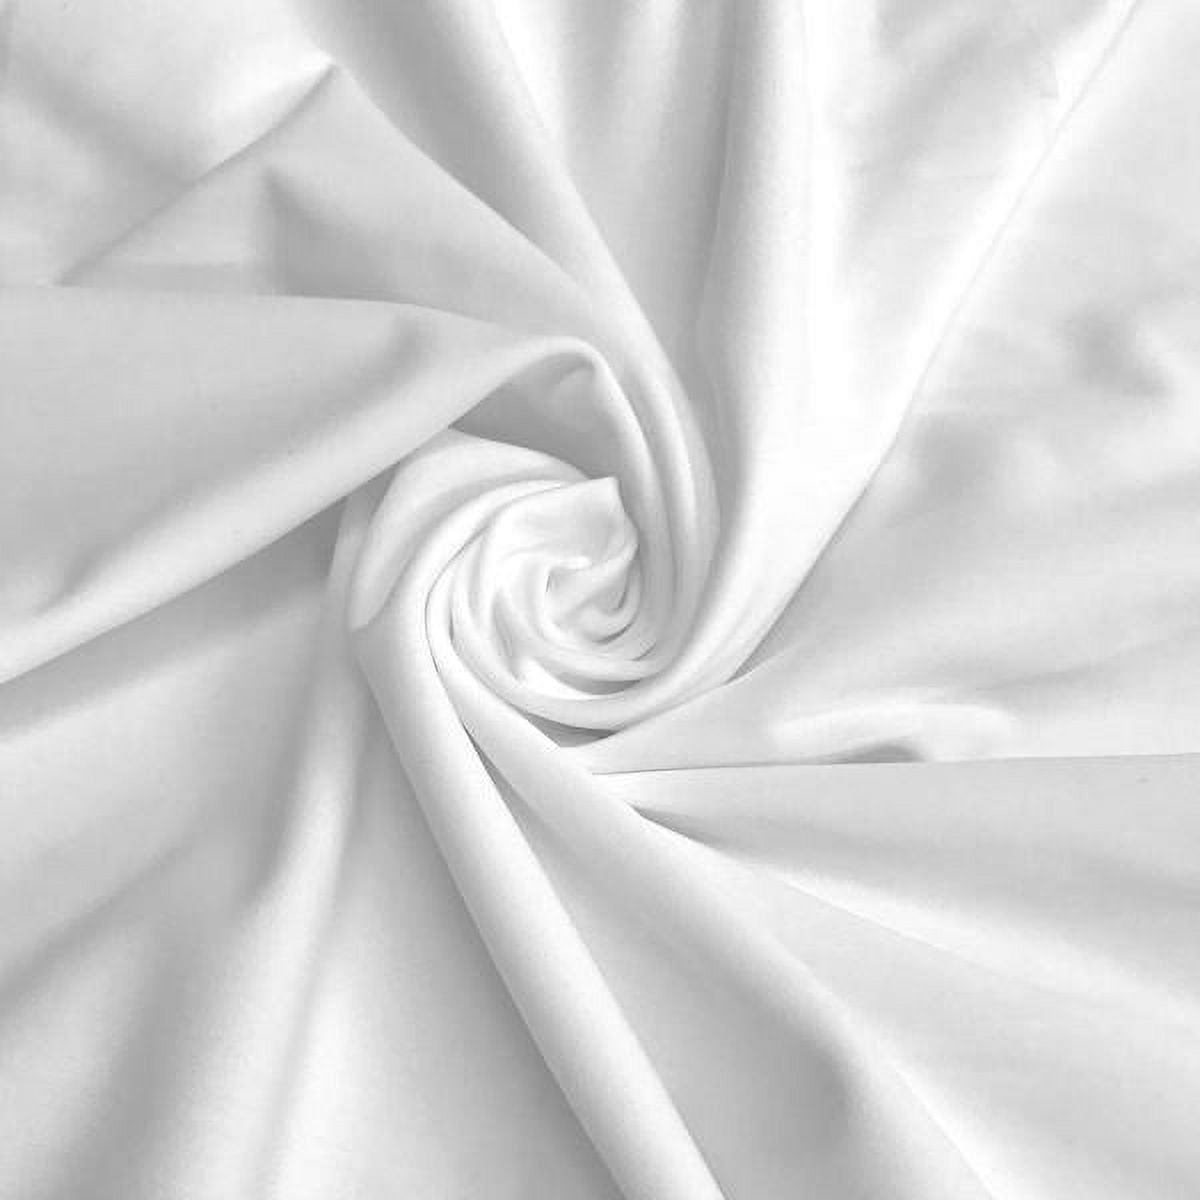 Spandex Nylon Lycra 4 Way Stretch Fabric W150cm/190gm - Shiny Finish (Price  per 50cm)